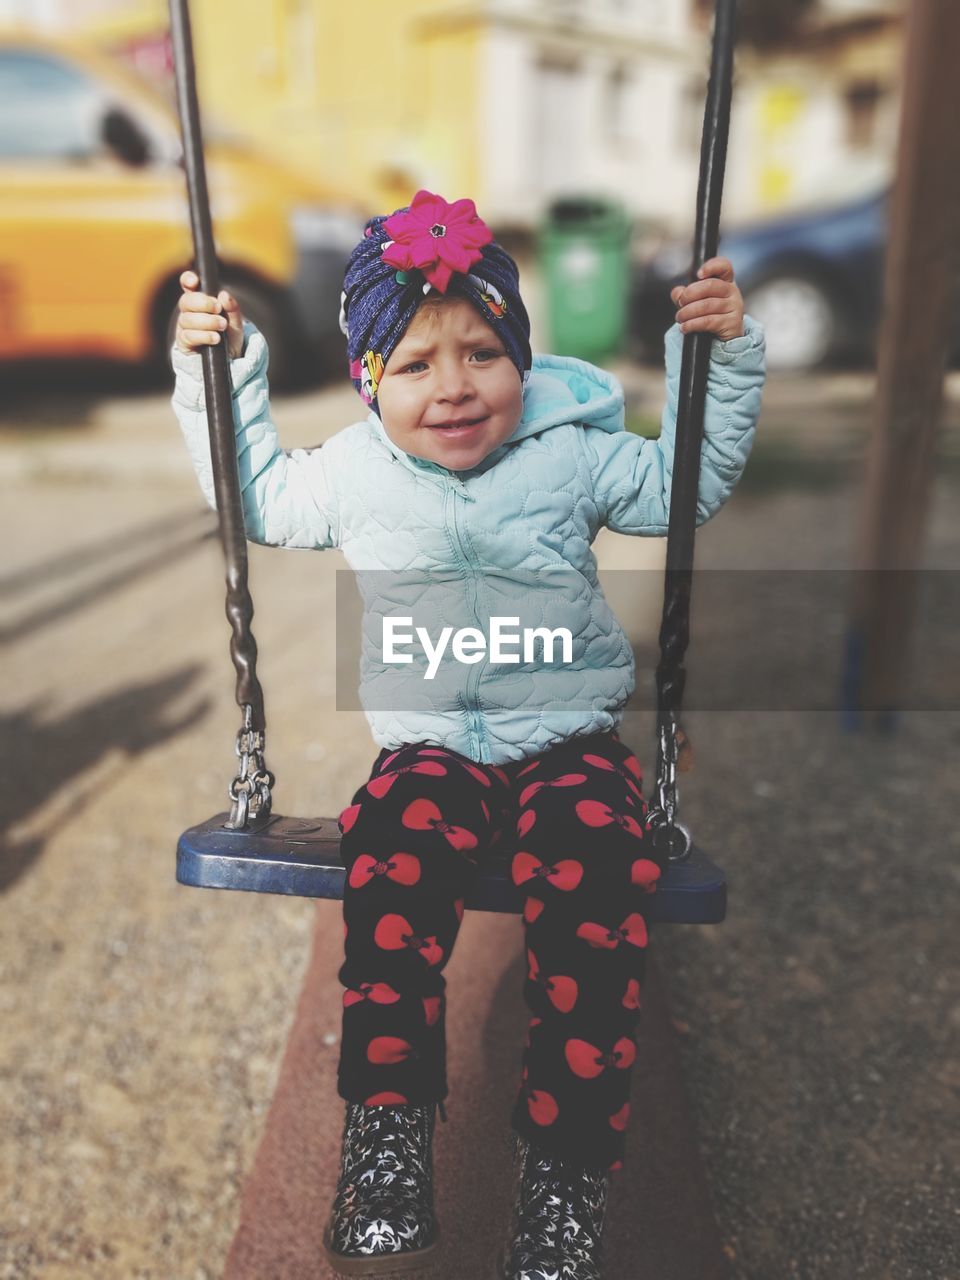 Cute girl holding camera at playground